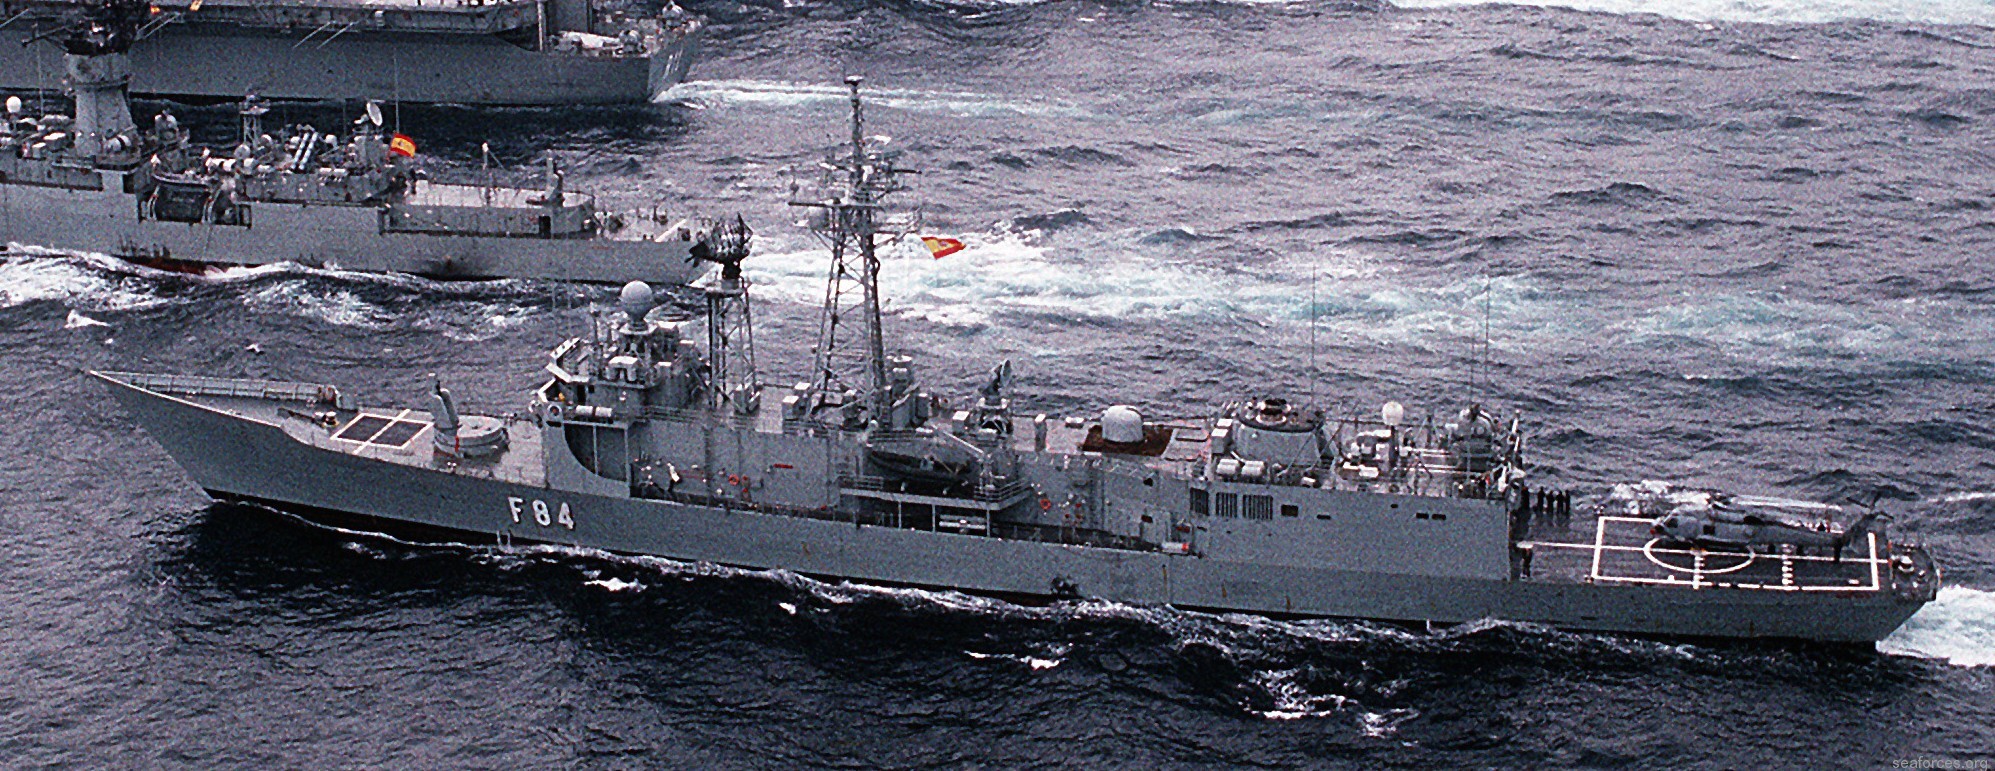 f-84 sps reina sofia f80 santa maria class guided missile frigate ffg spanish navy 05